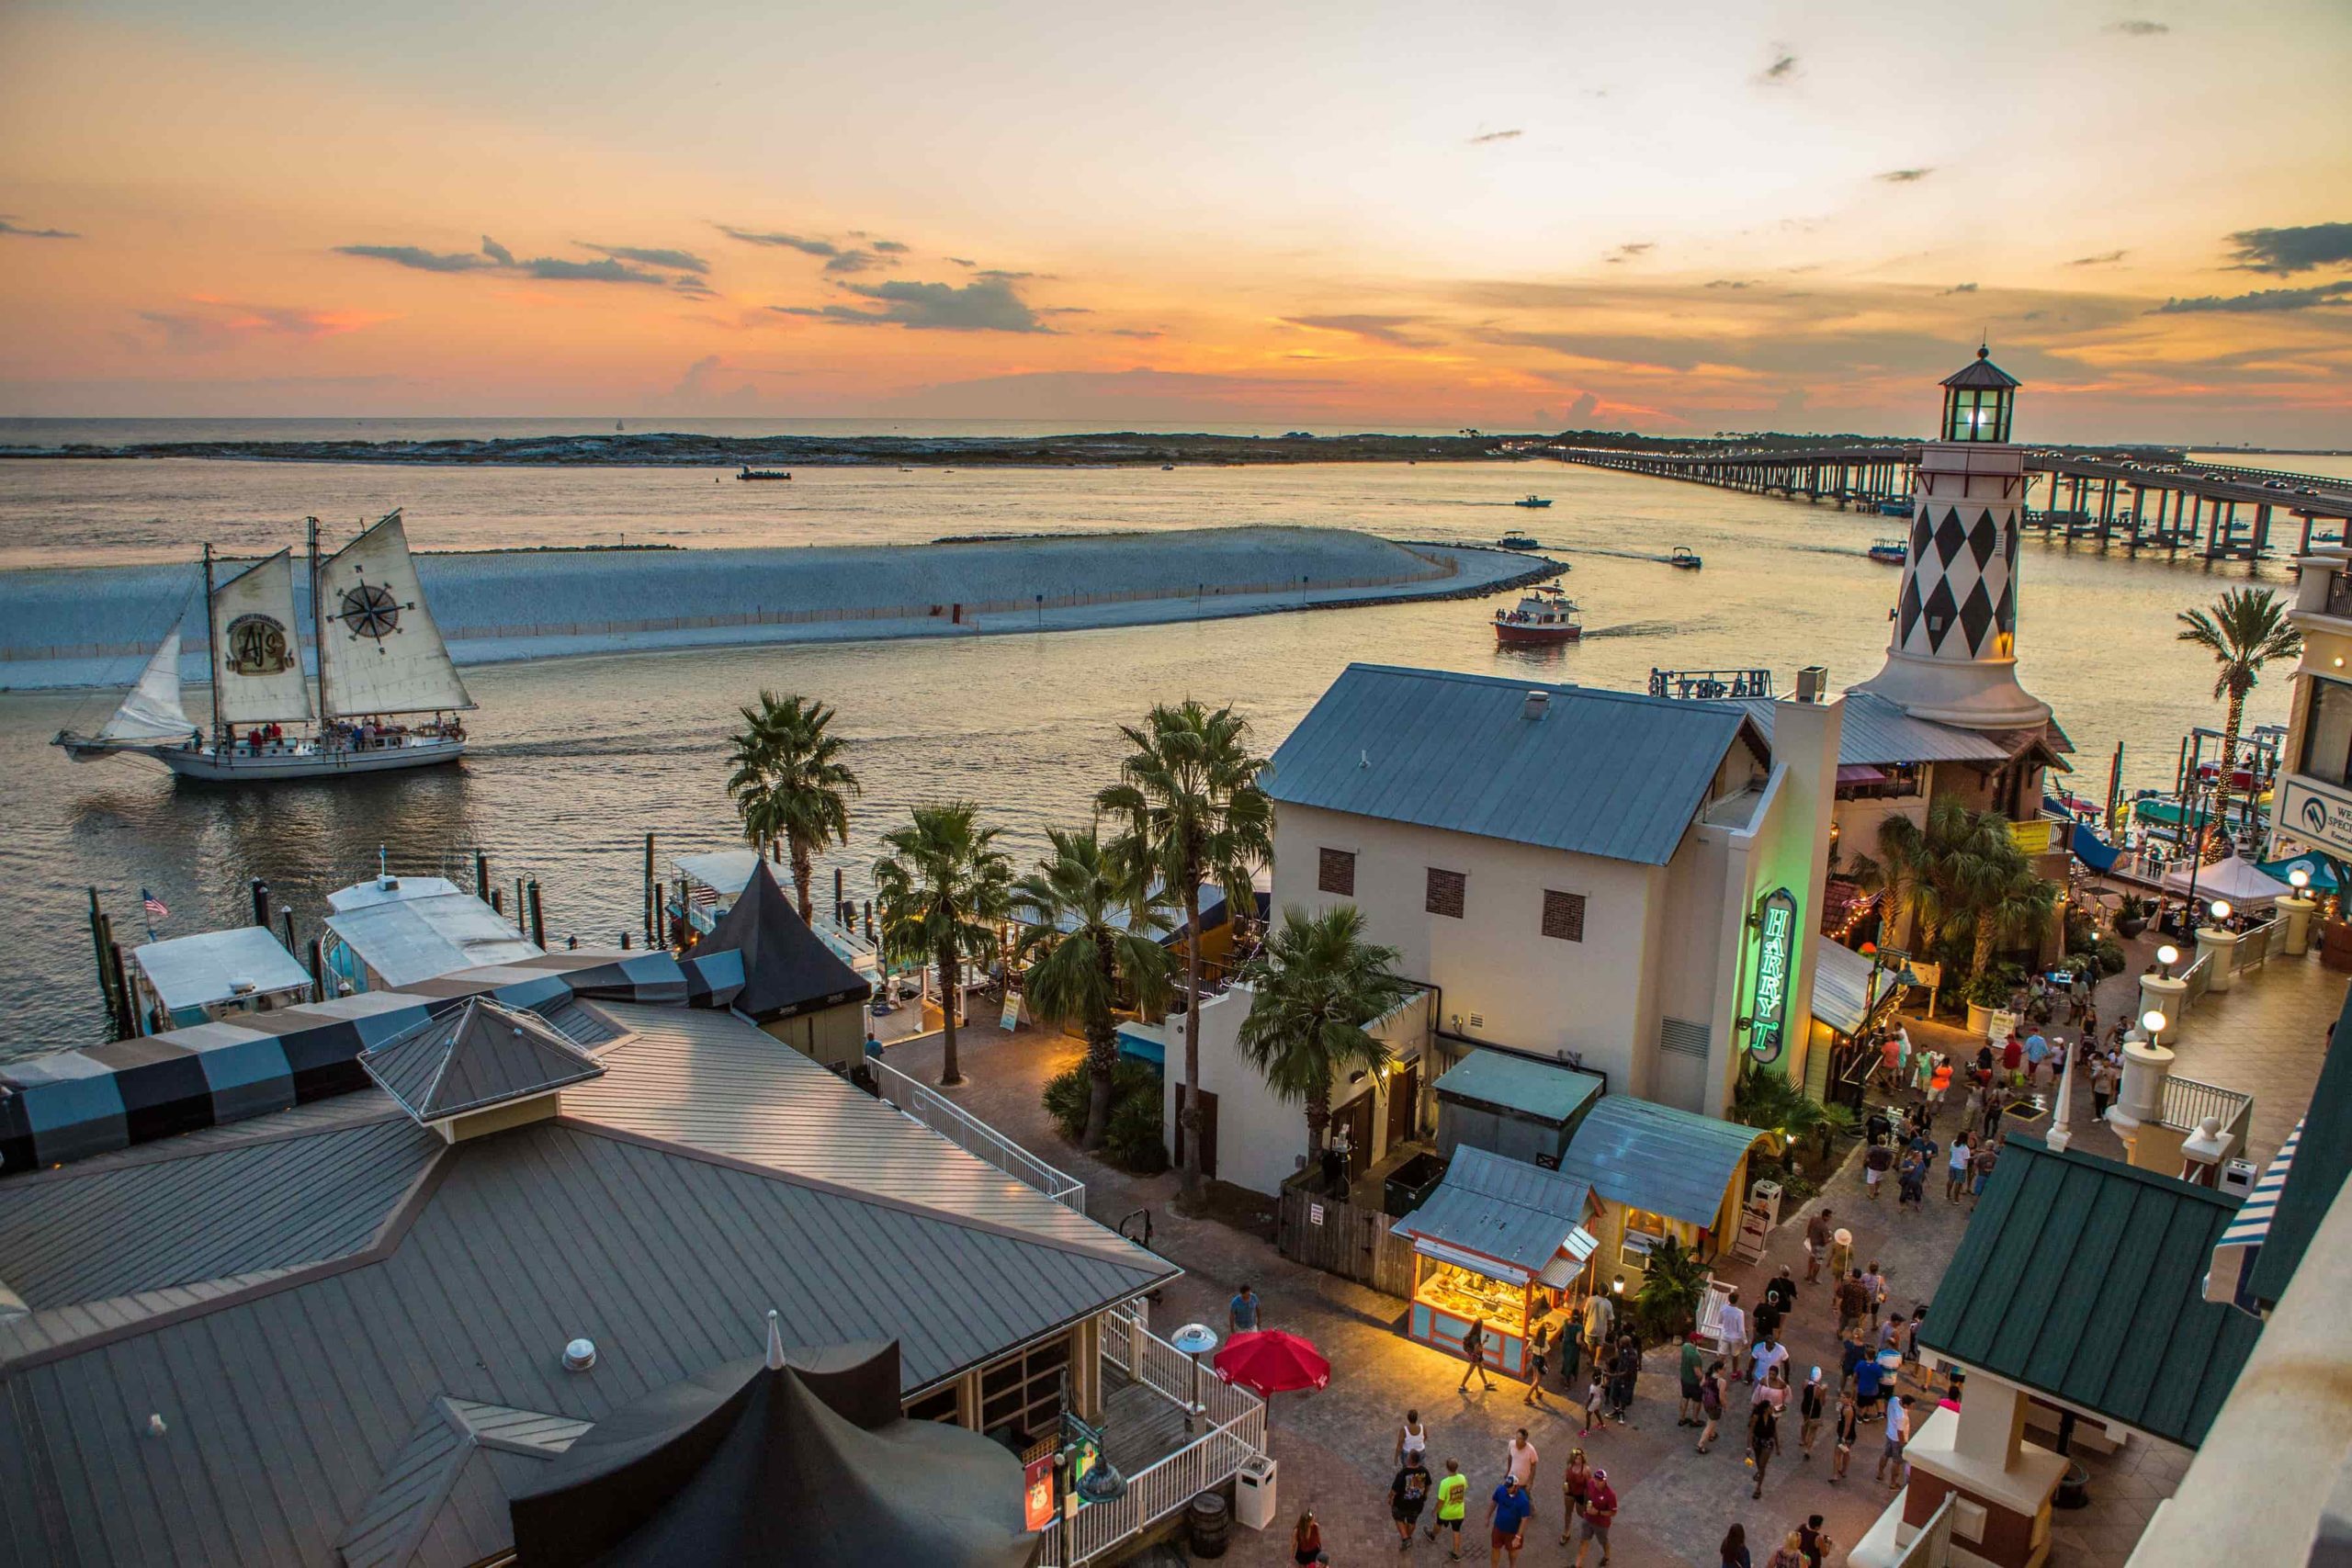 Top 10 Tourist Attractions in Destin Florida